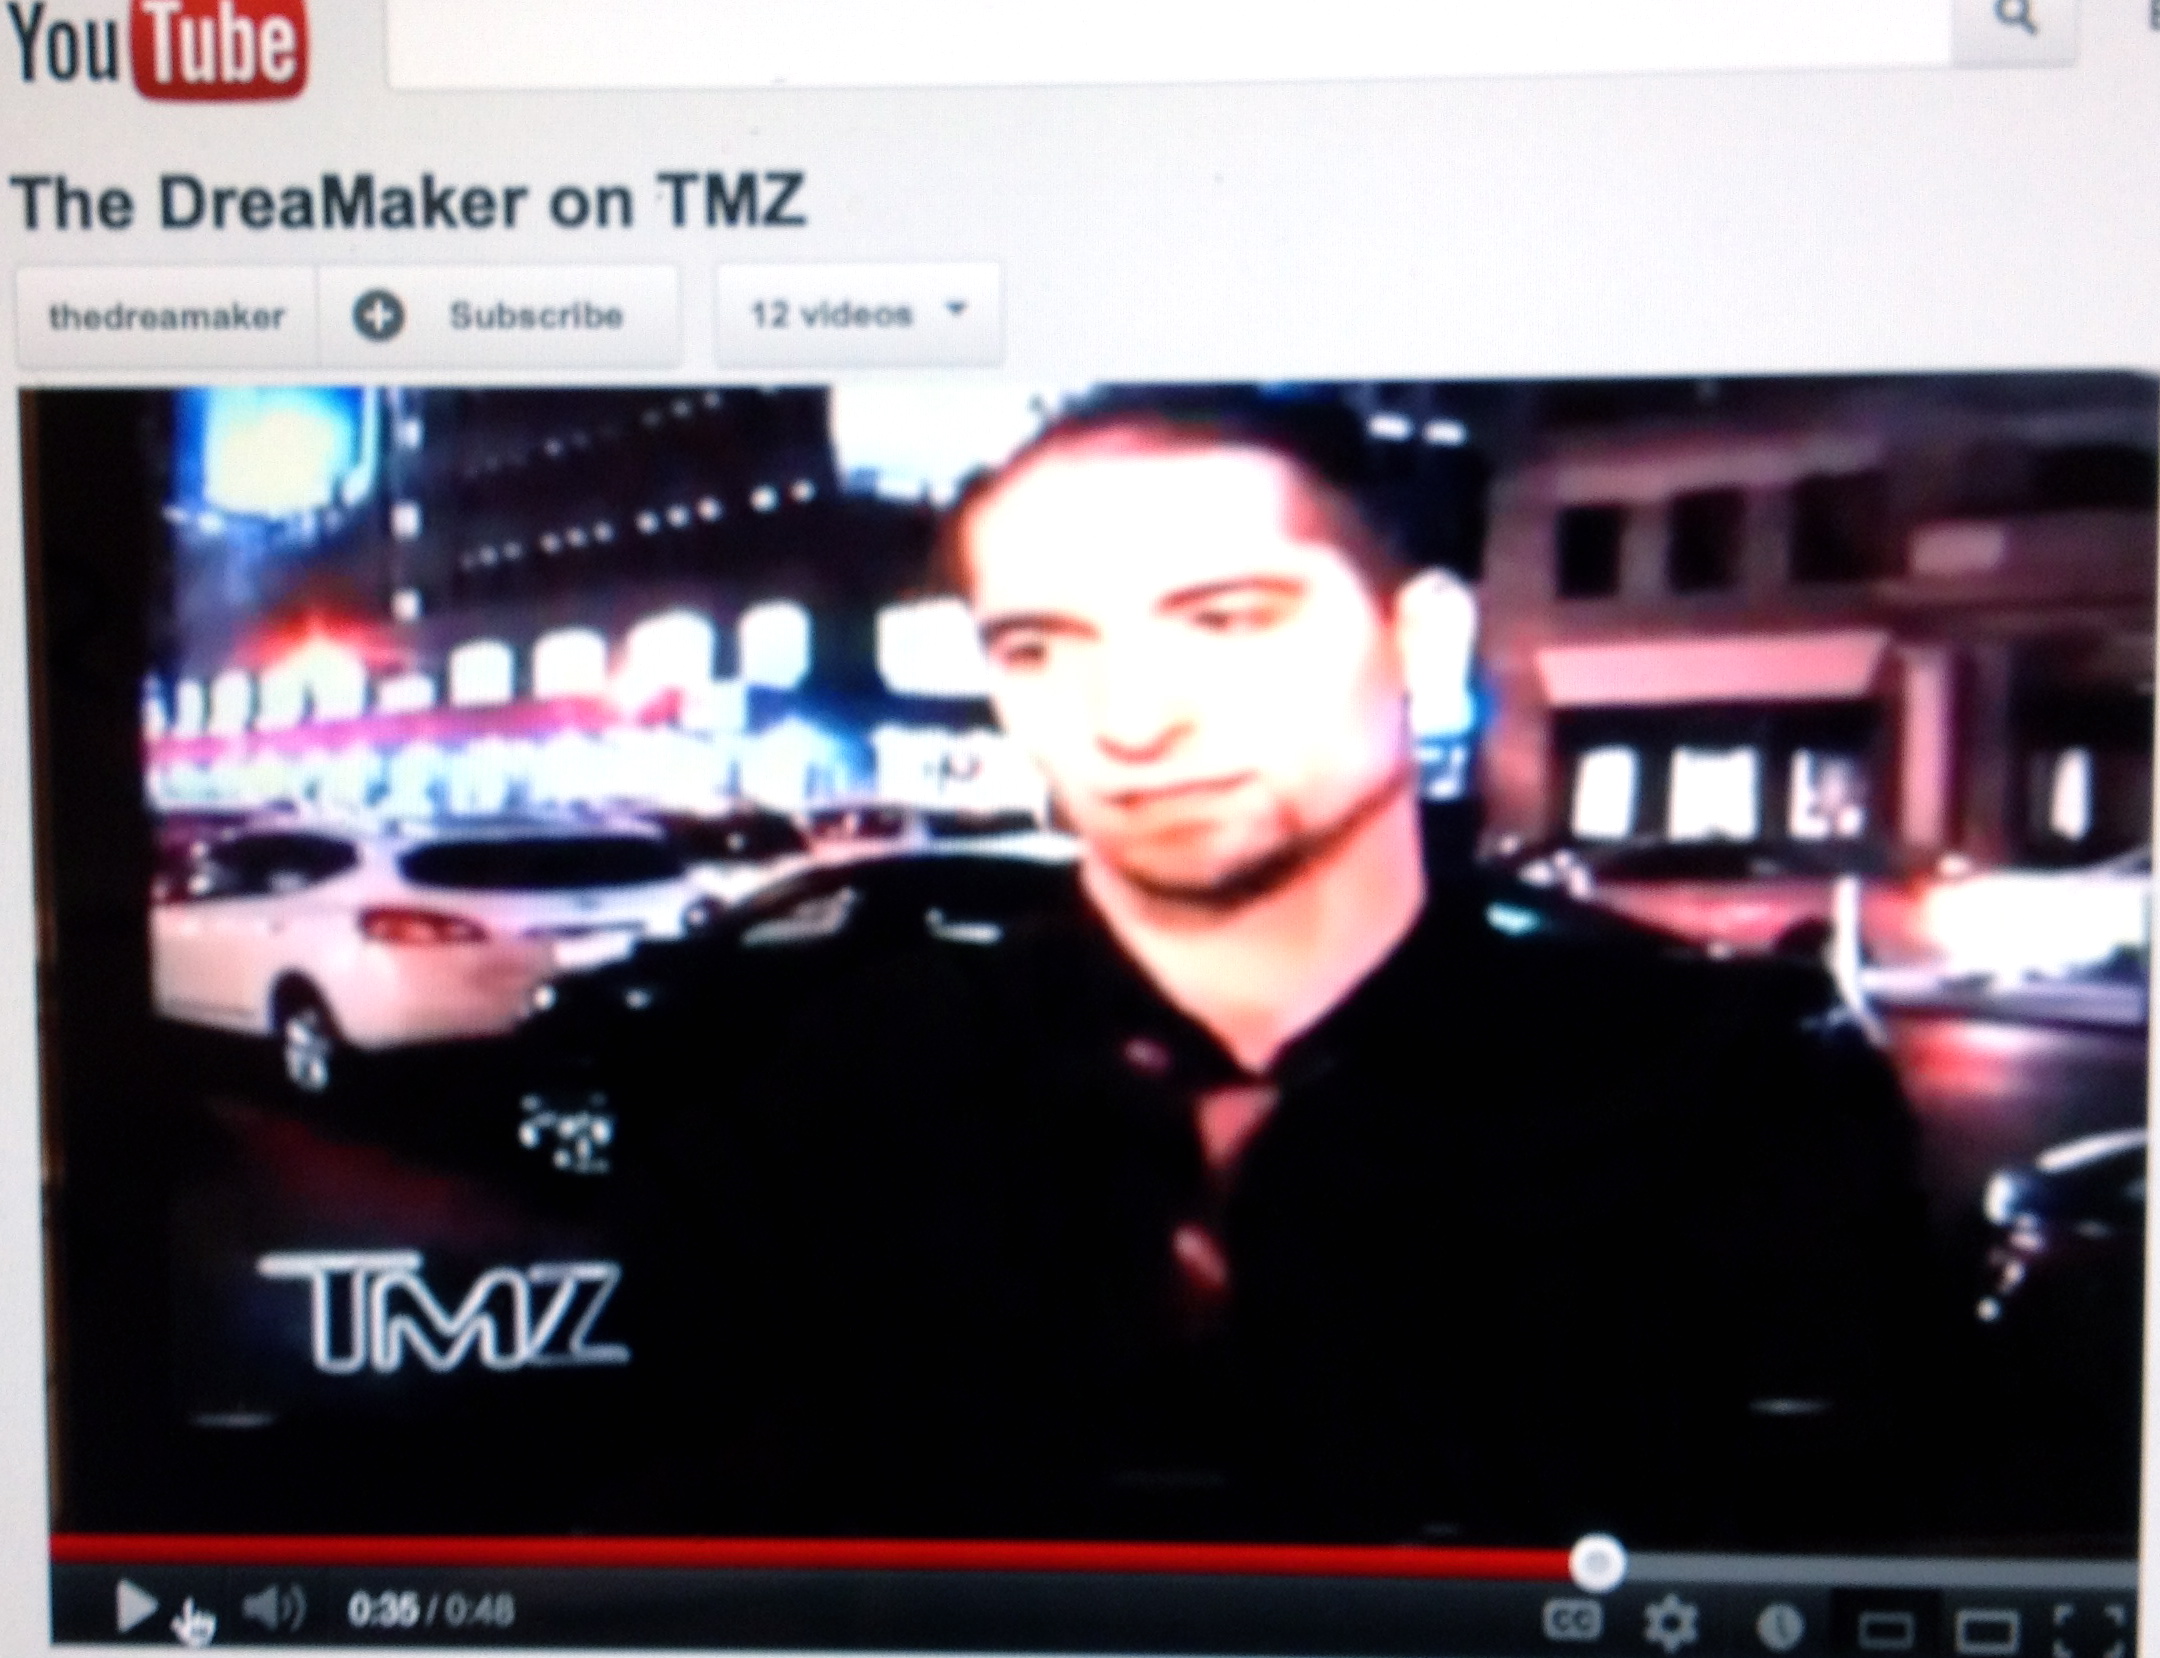 The DreaMaker on TMZ